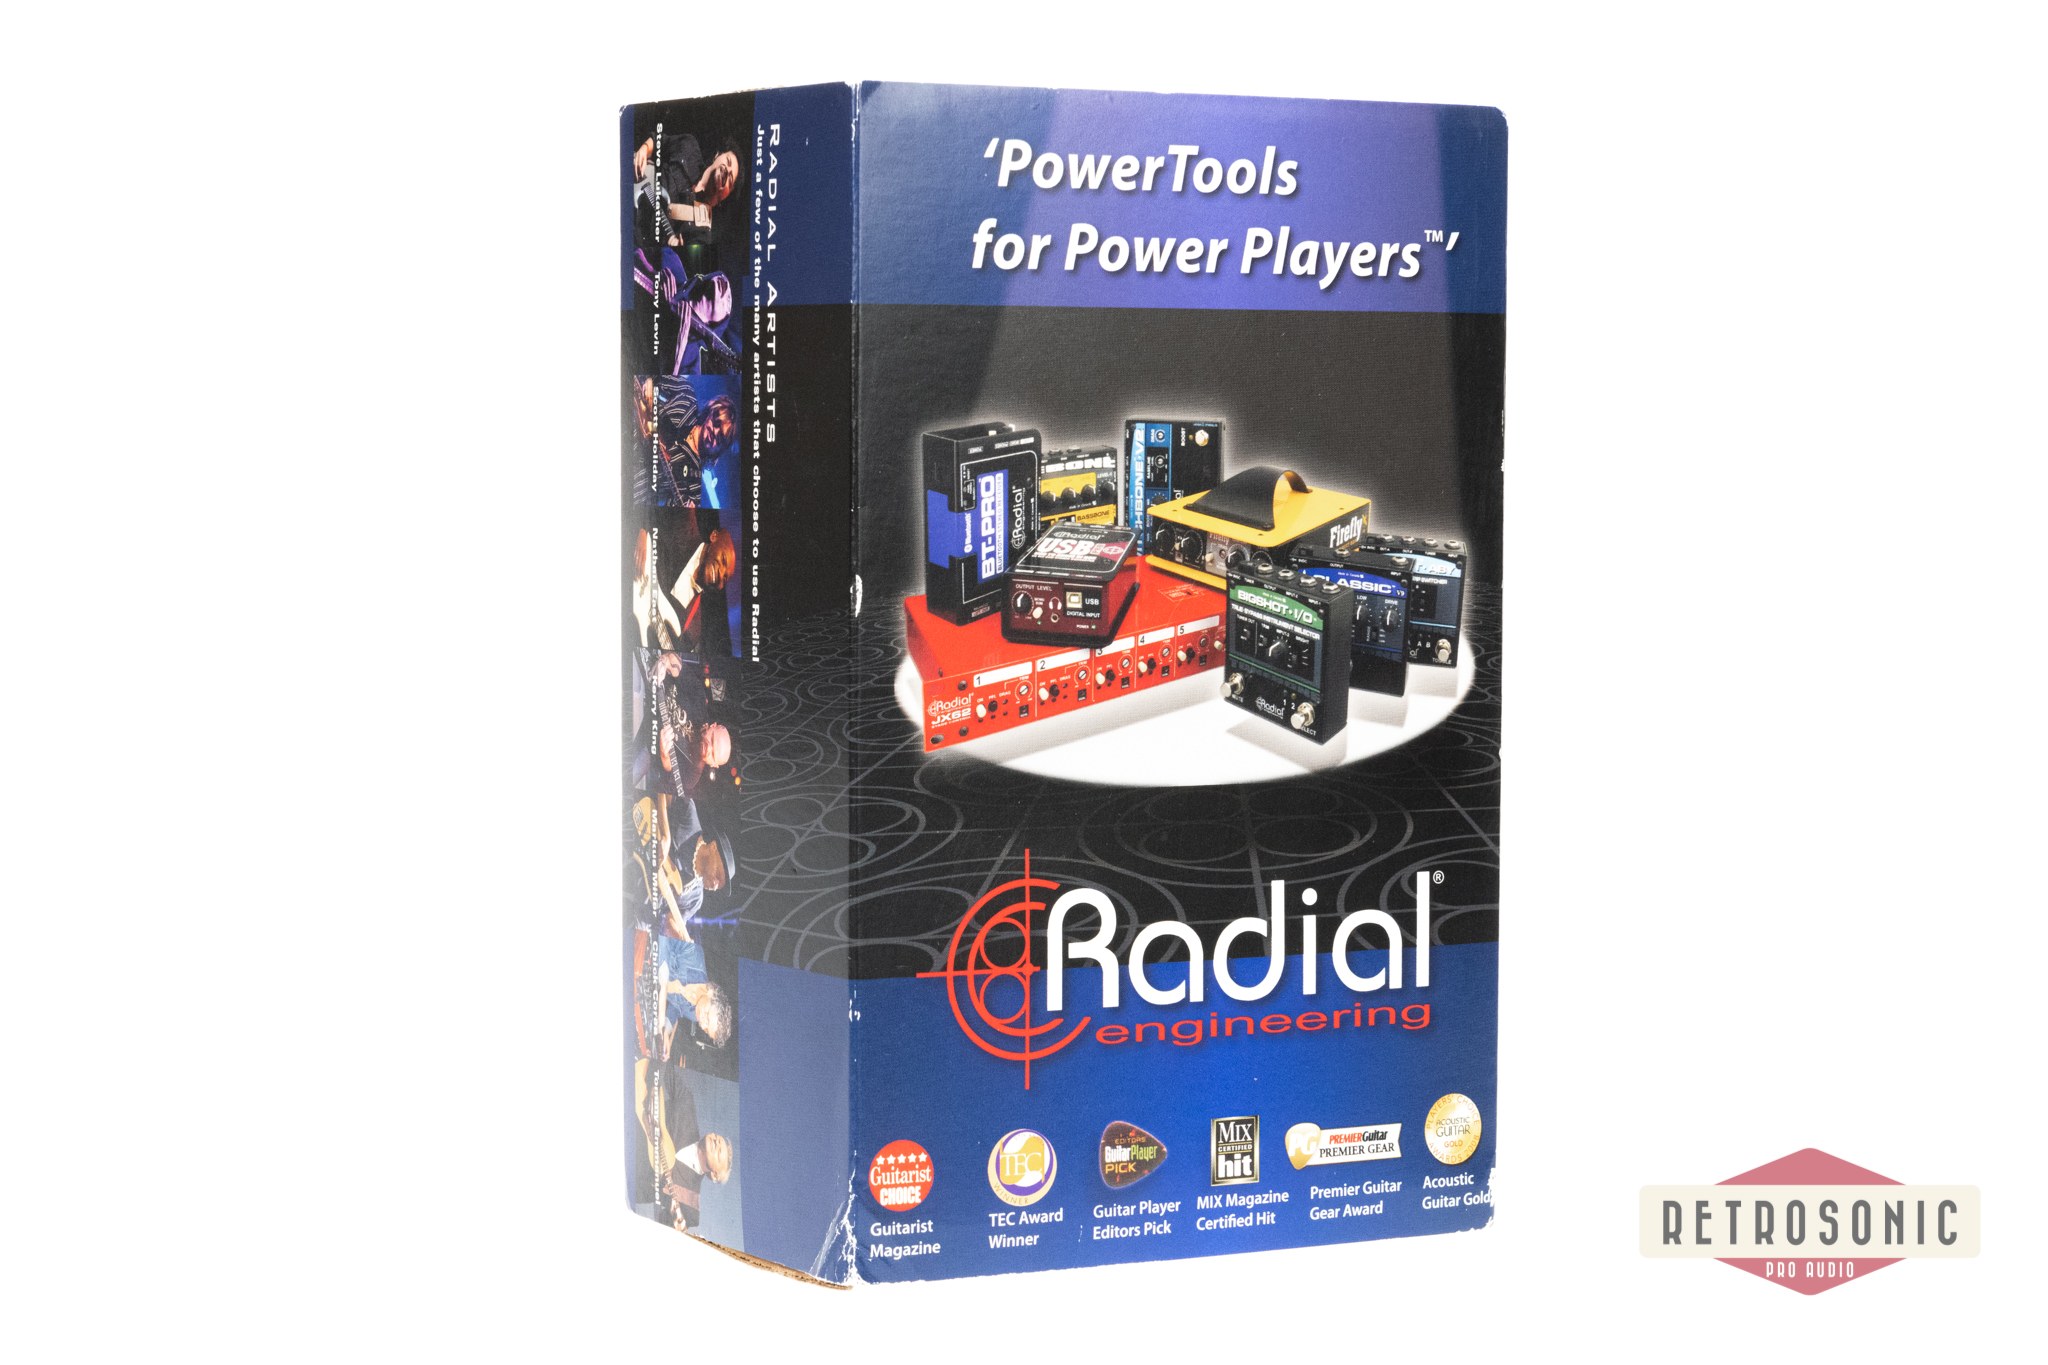 Radial JR-2 Remote R800209000